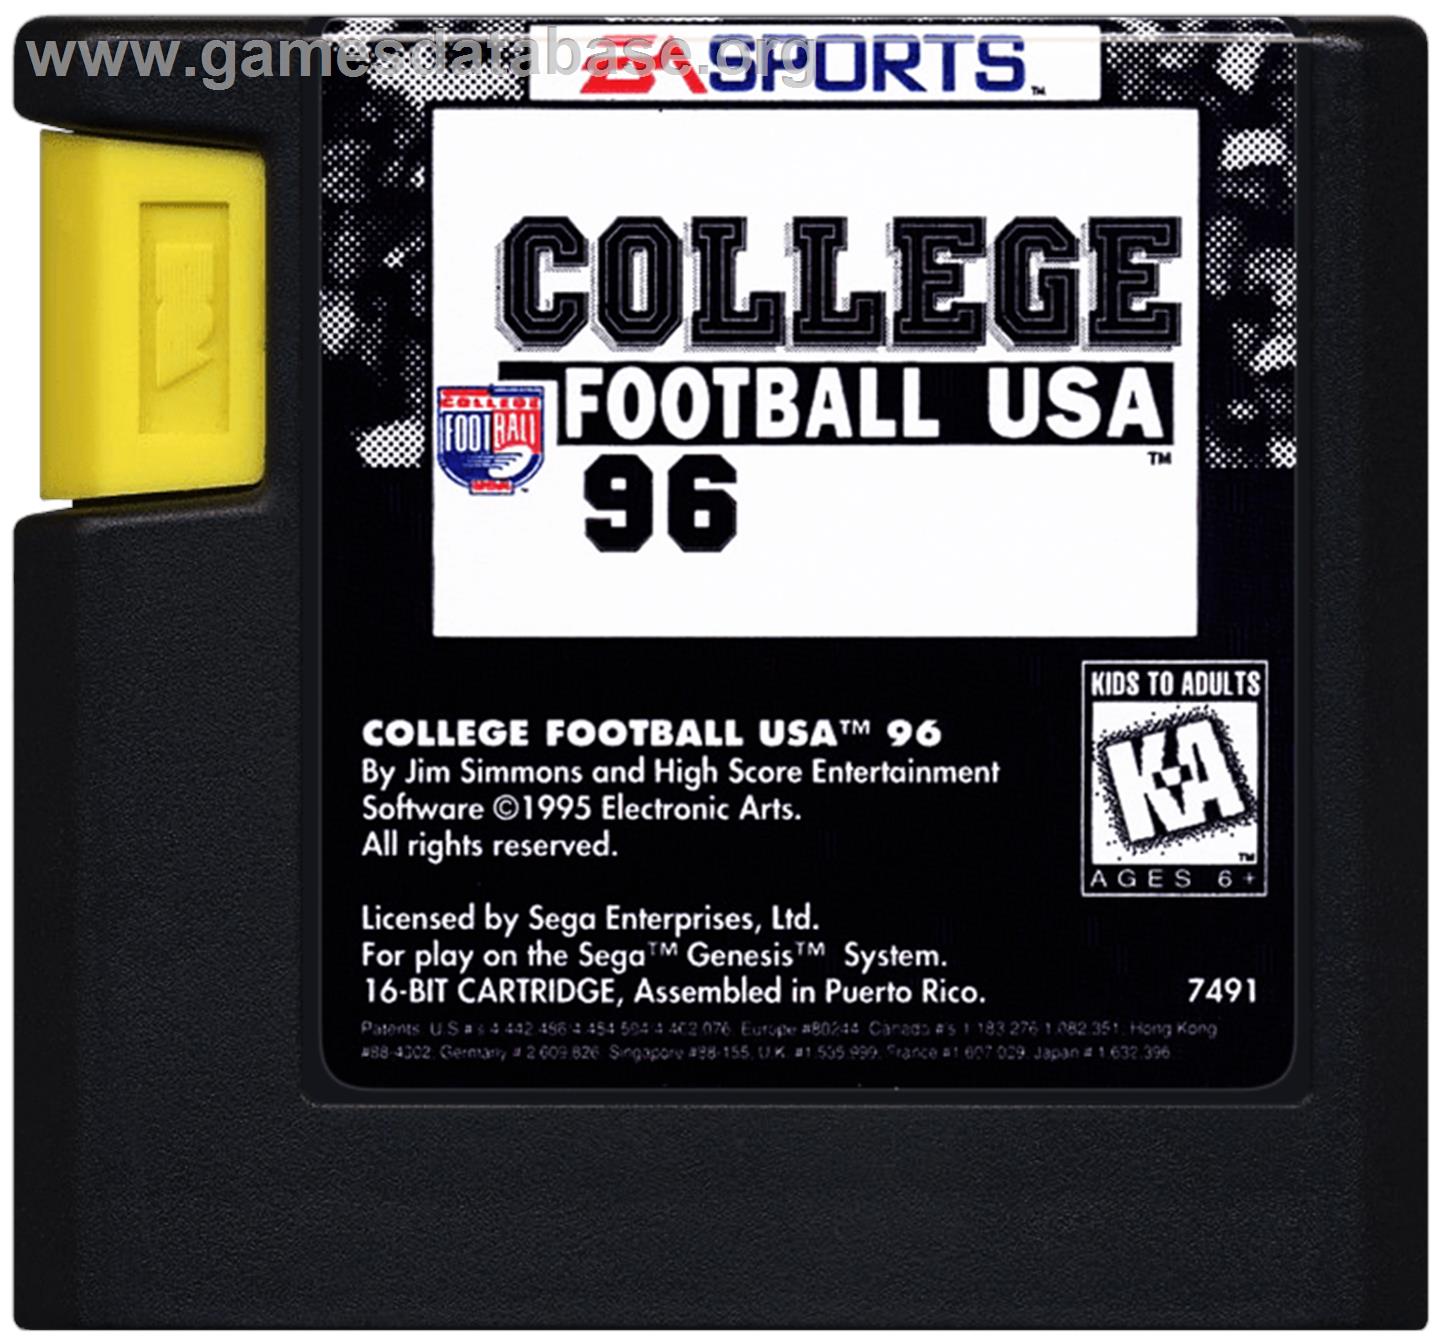 College Football's National Championship - Sega Genesis - Artwork - Cartridge